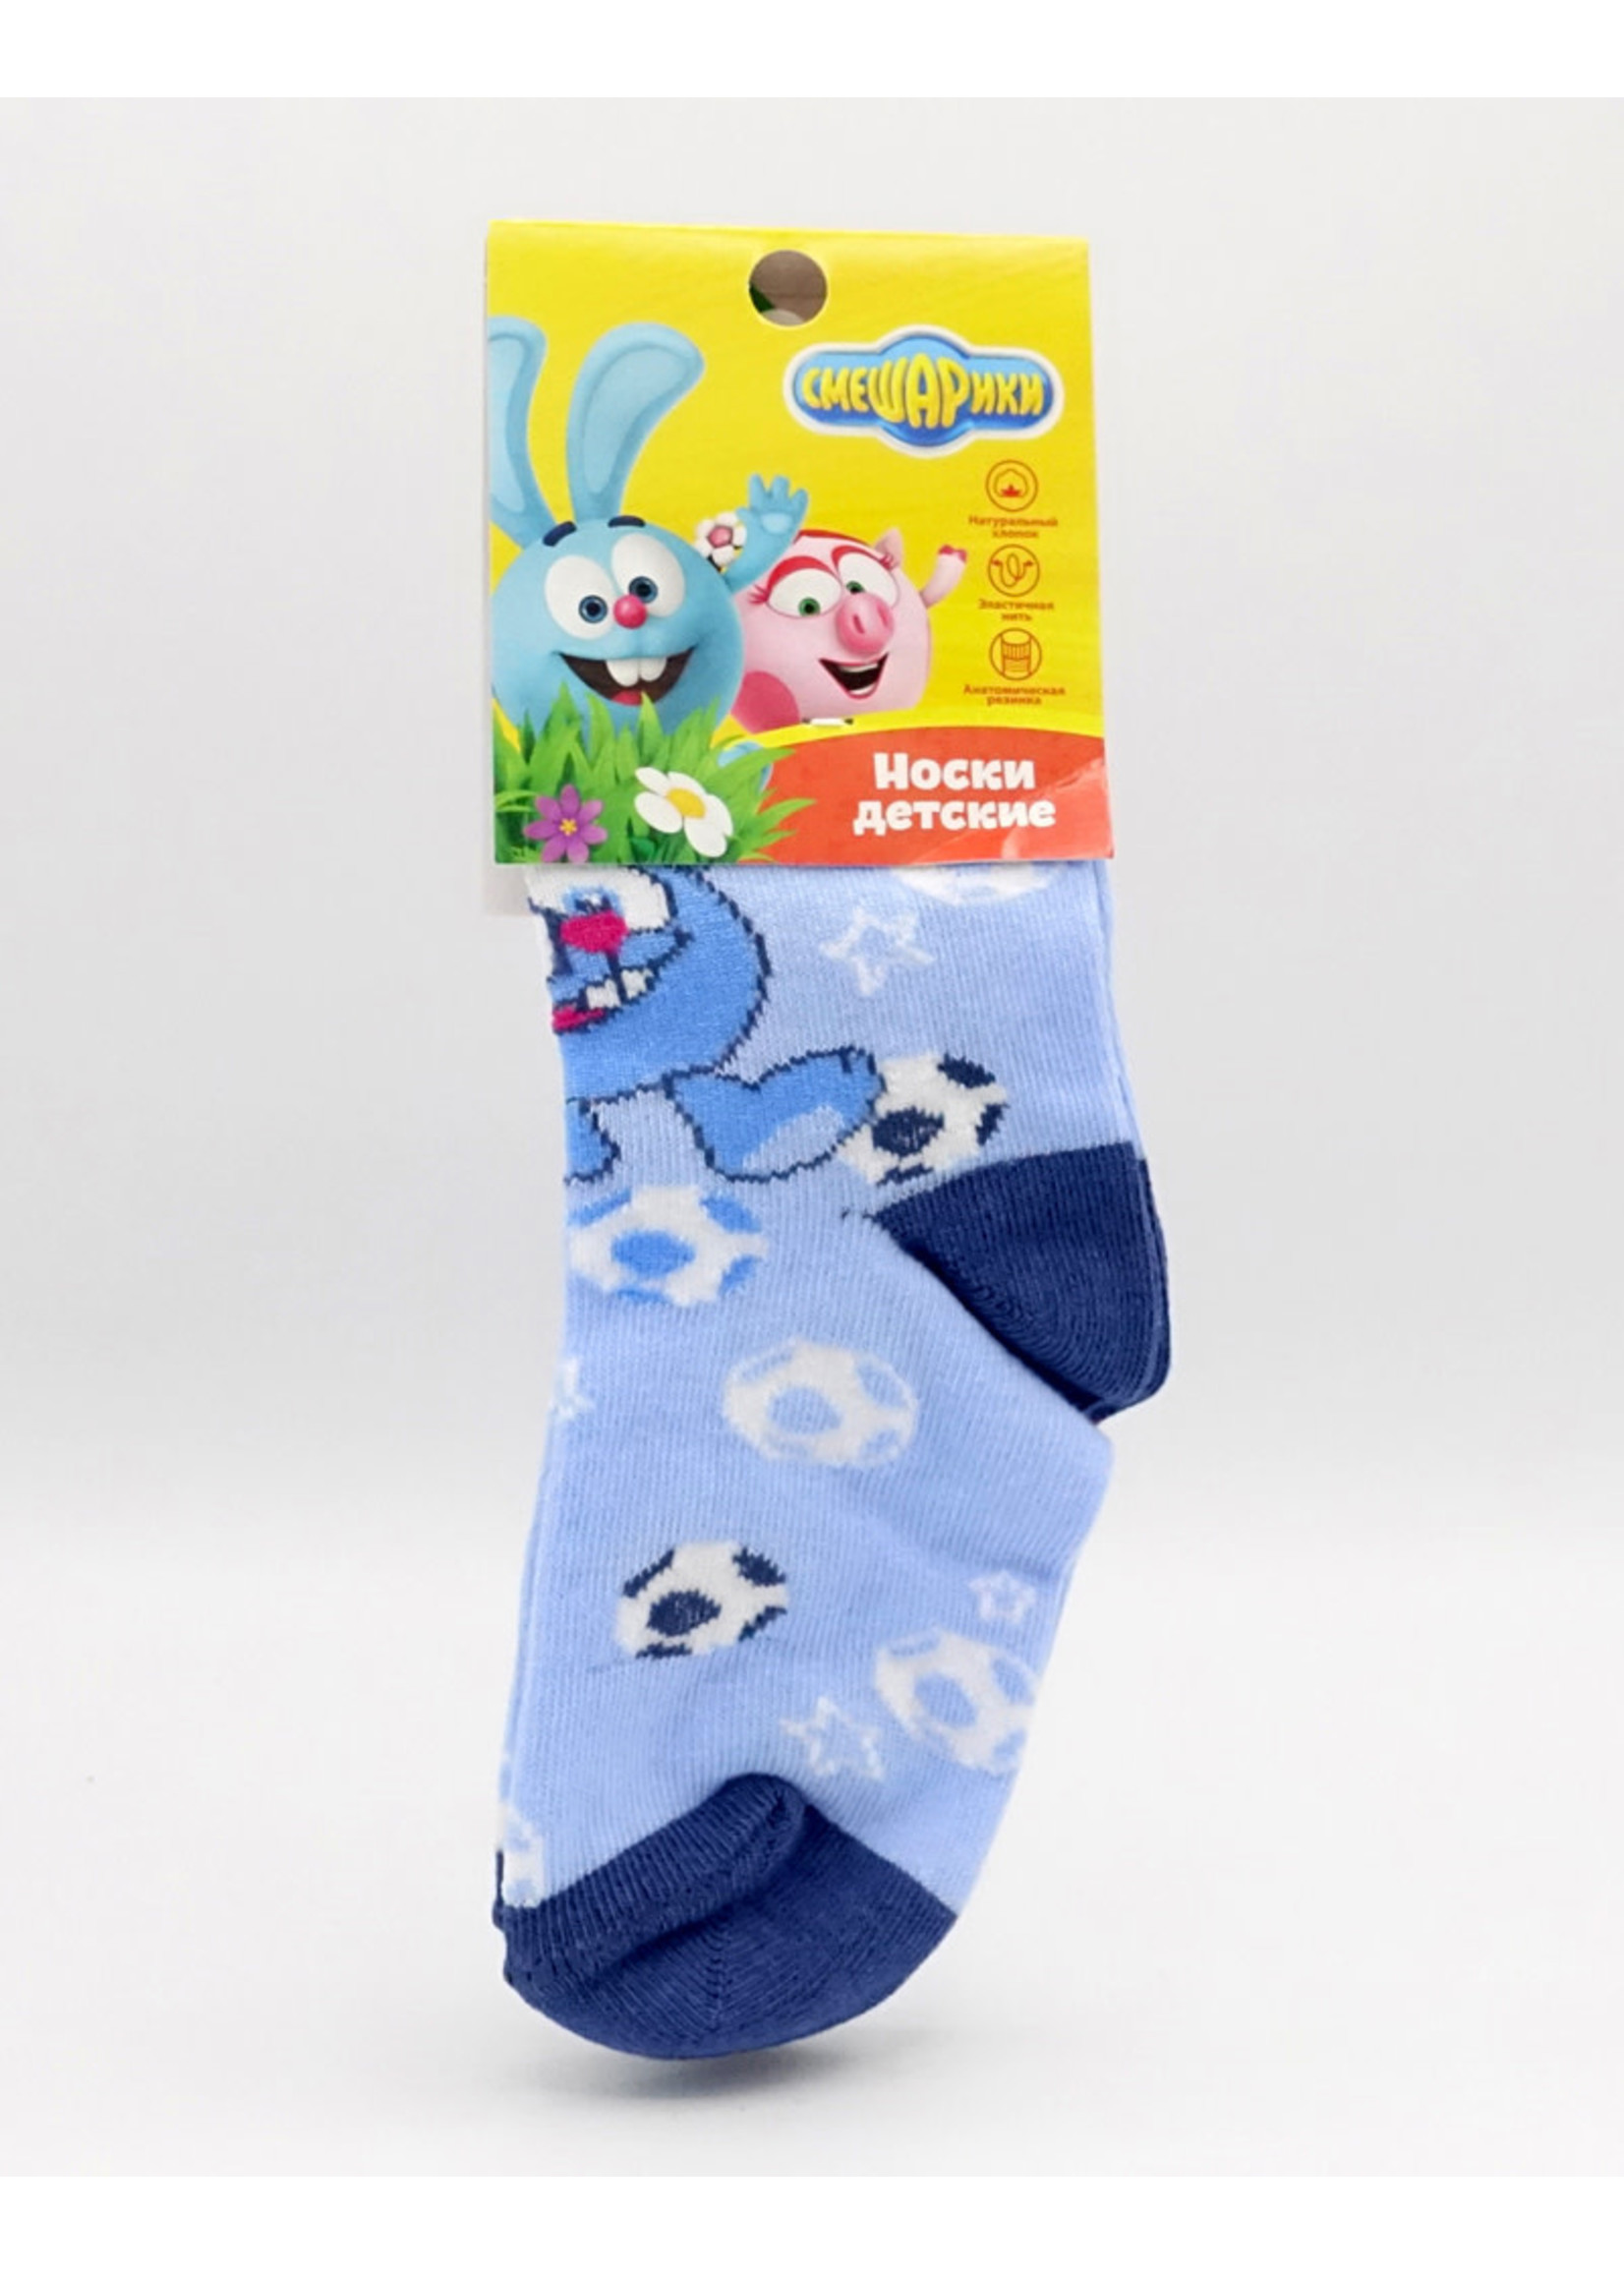 Children's Socks "Smeshariki" 1-2 years old